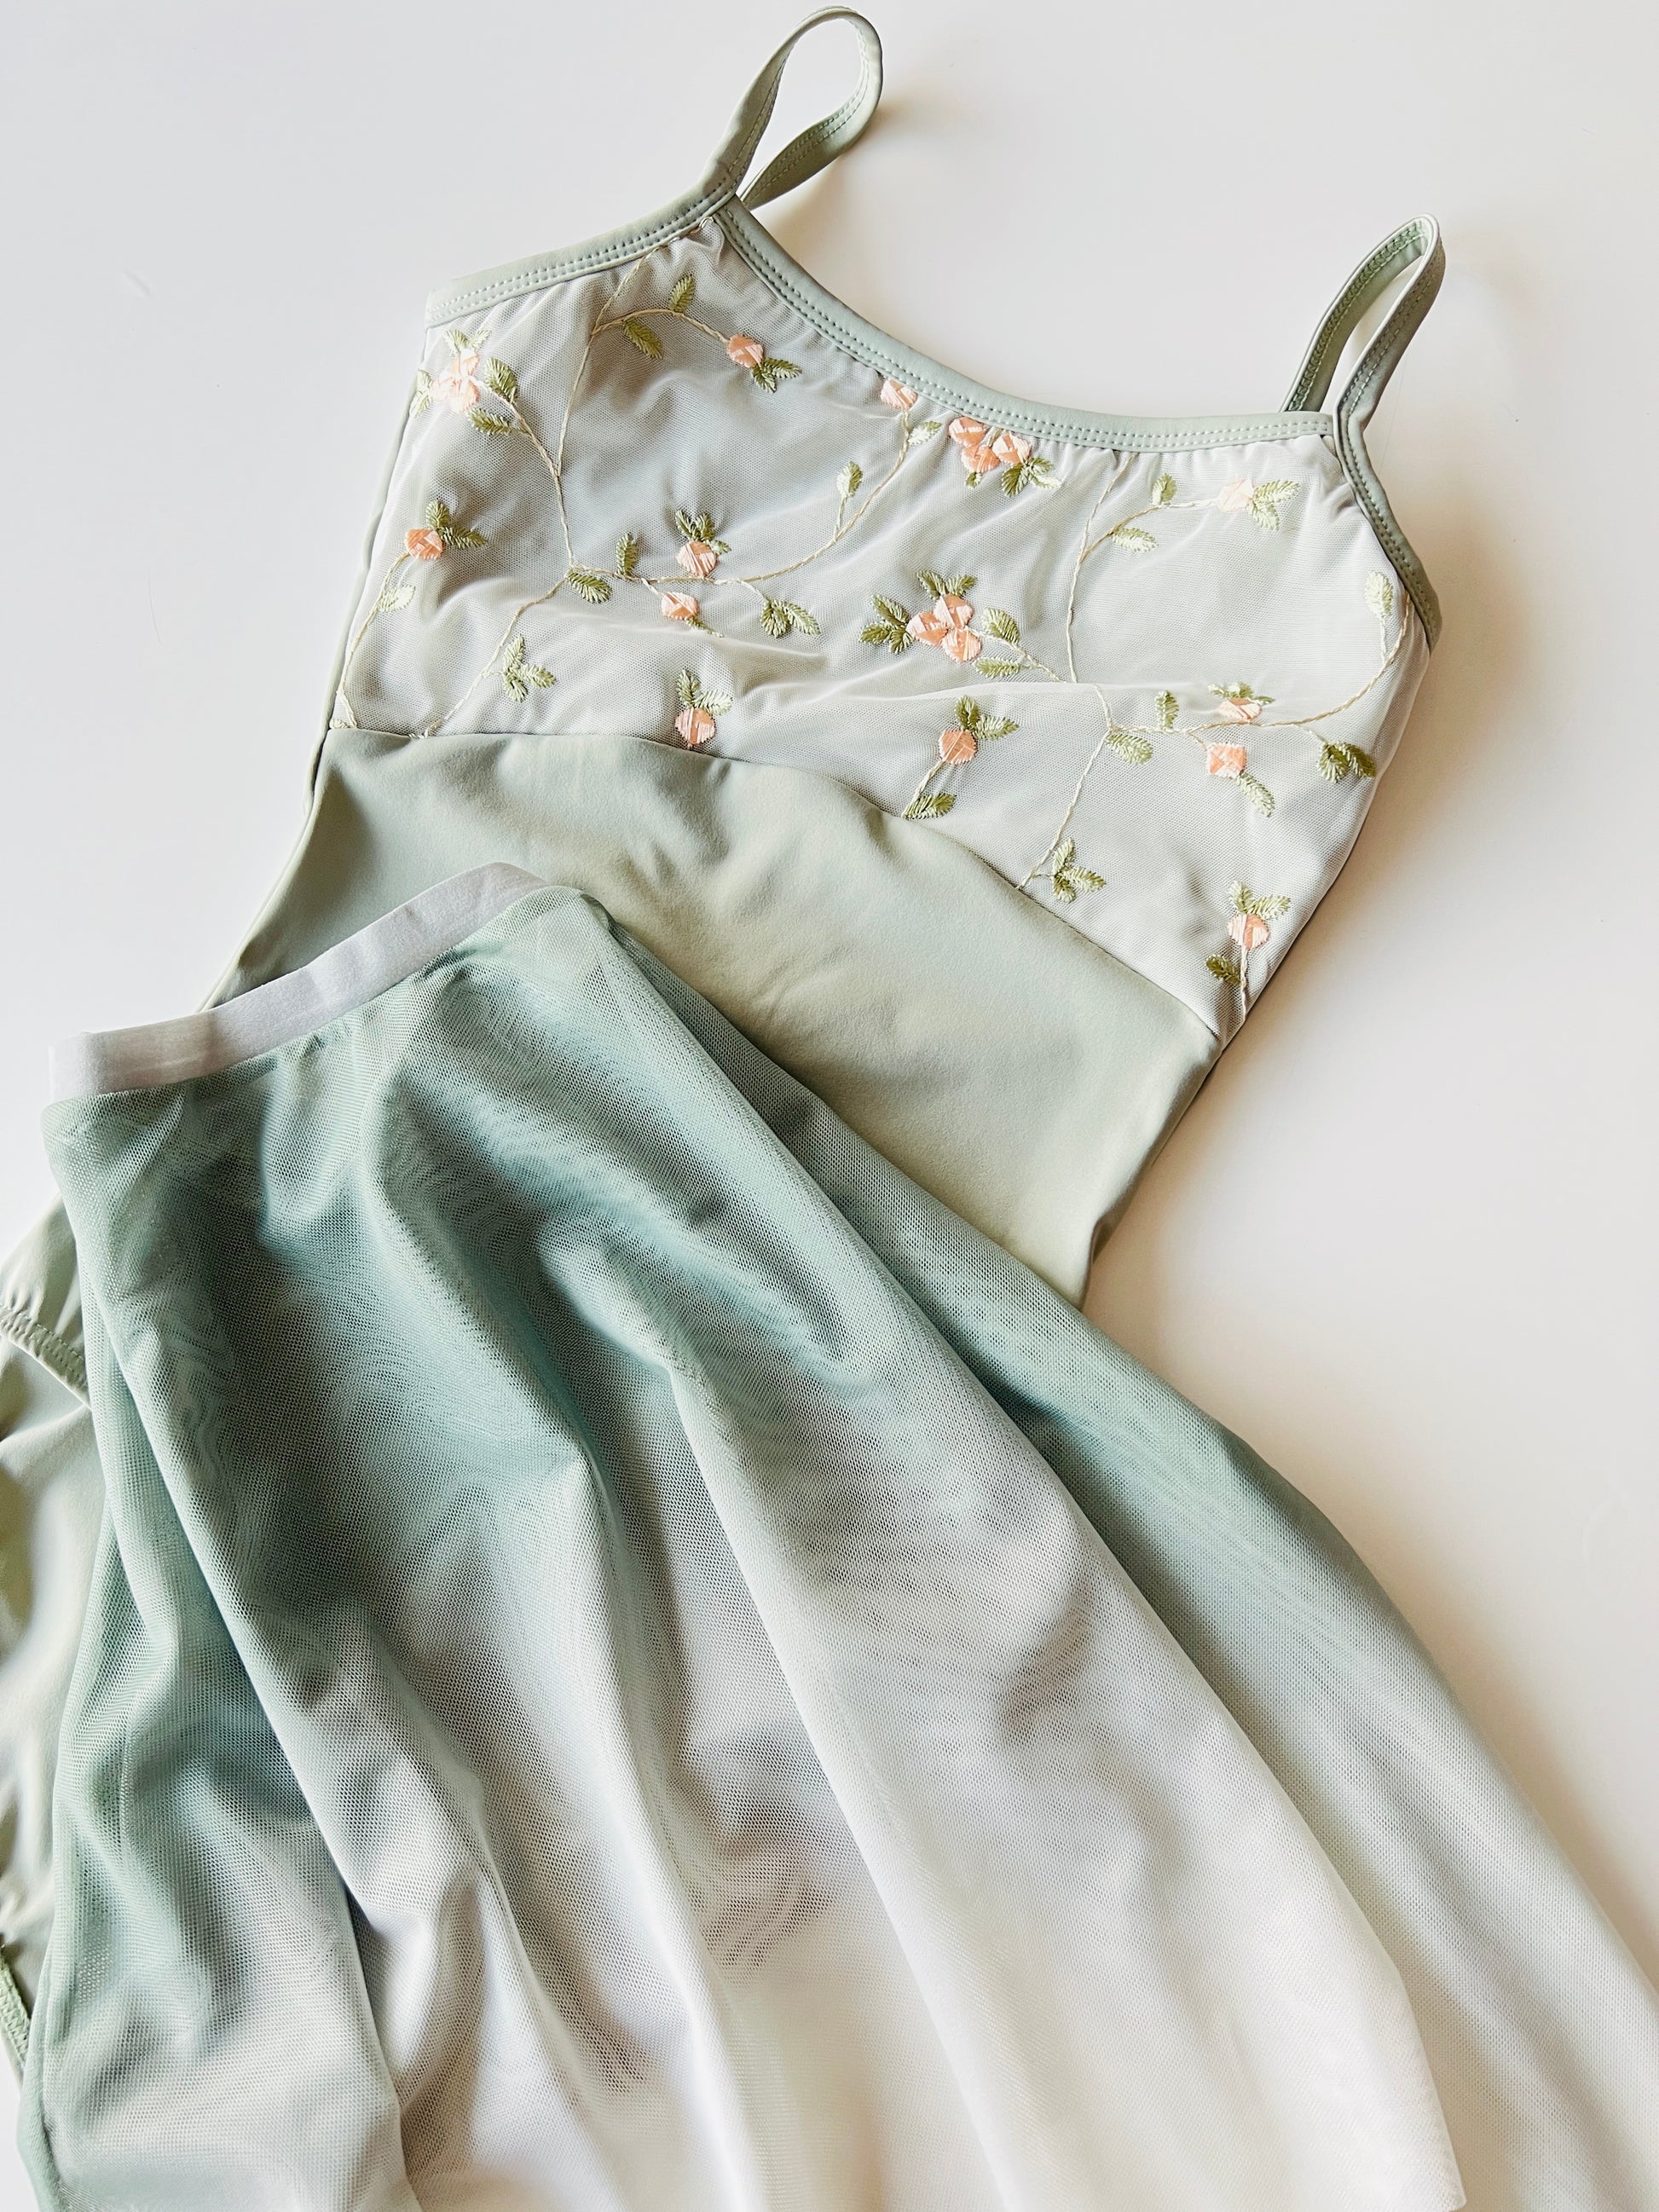 Long Practice Skirt Mesh - Ombre Green ballet skirt The Collective Dancewear